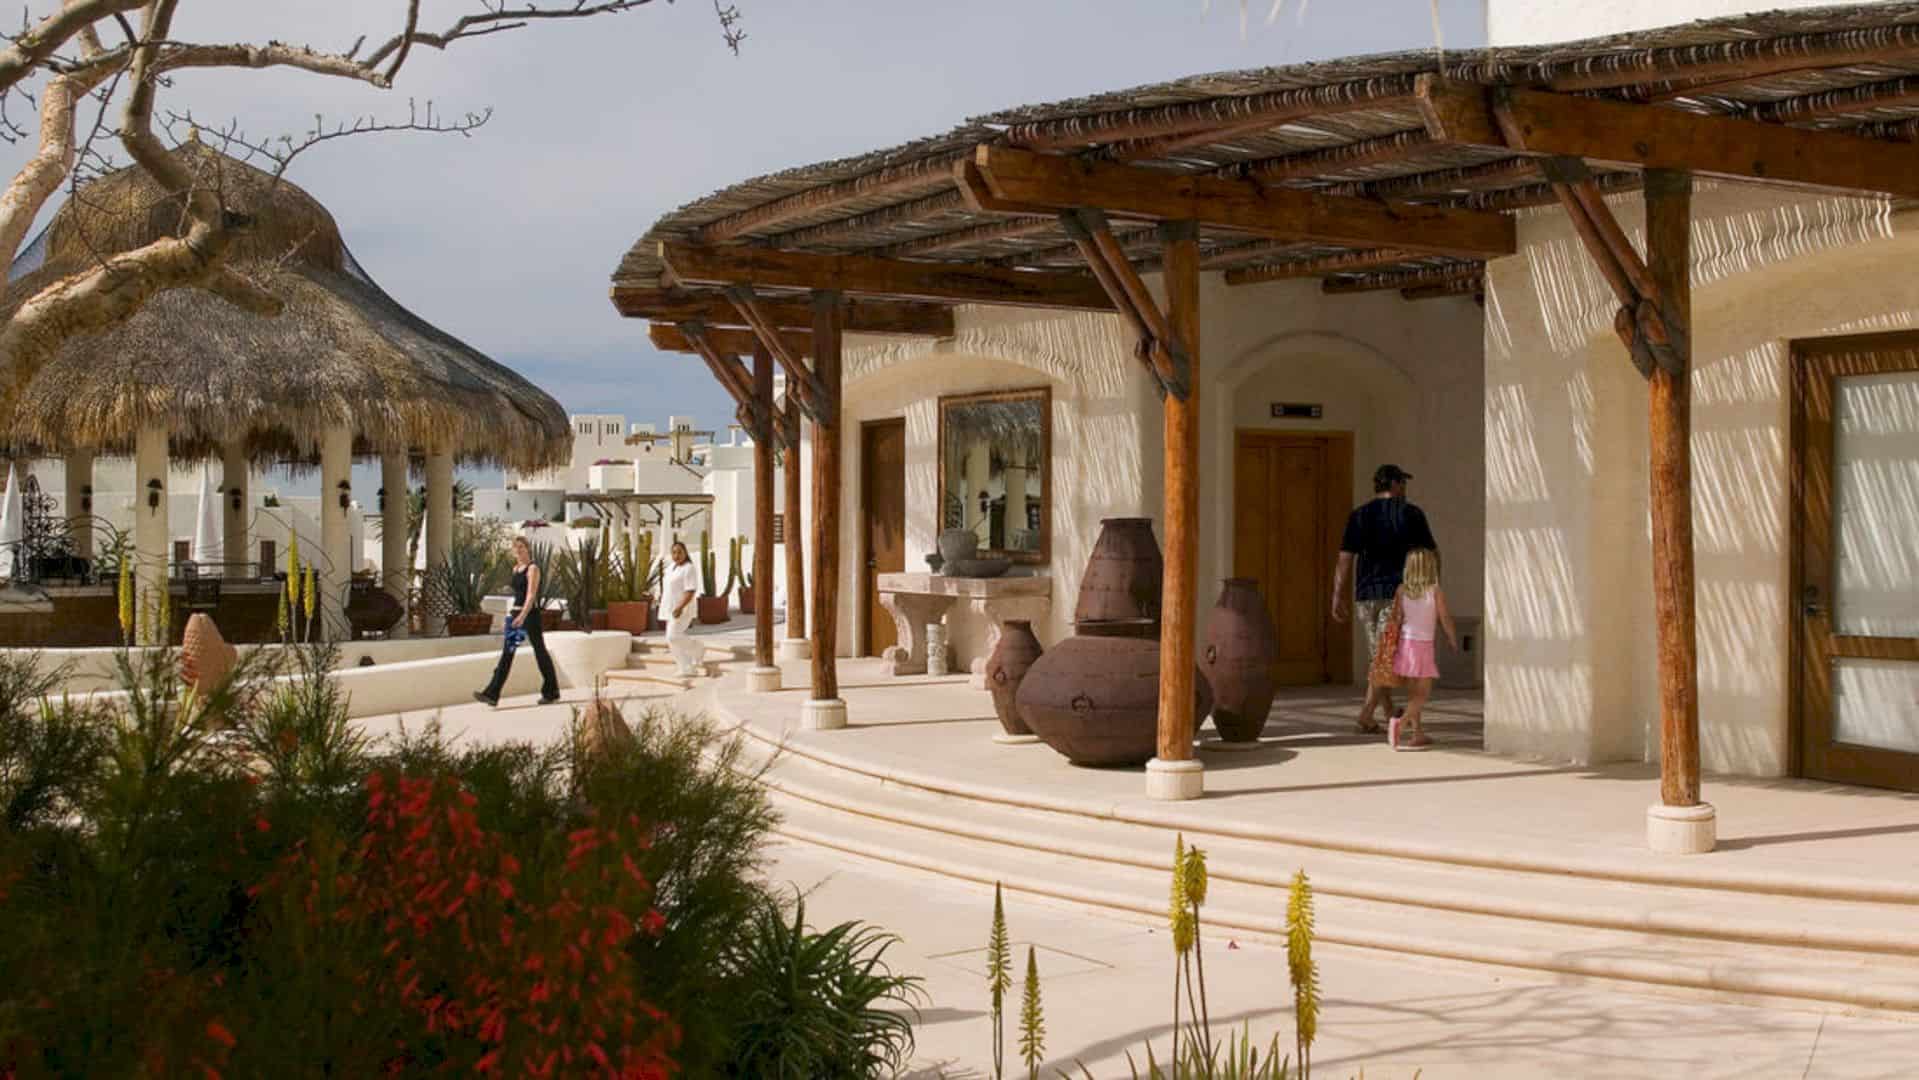 Las Ventanas Al Paraiso Award Winning Mexican Resort On A Seemingly Lifeless Landscape 13